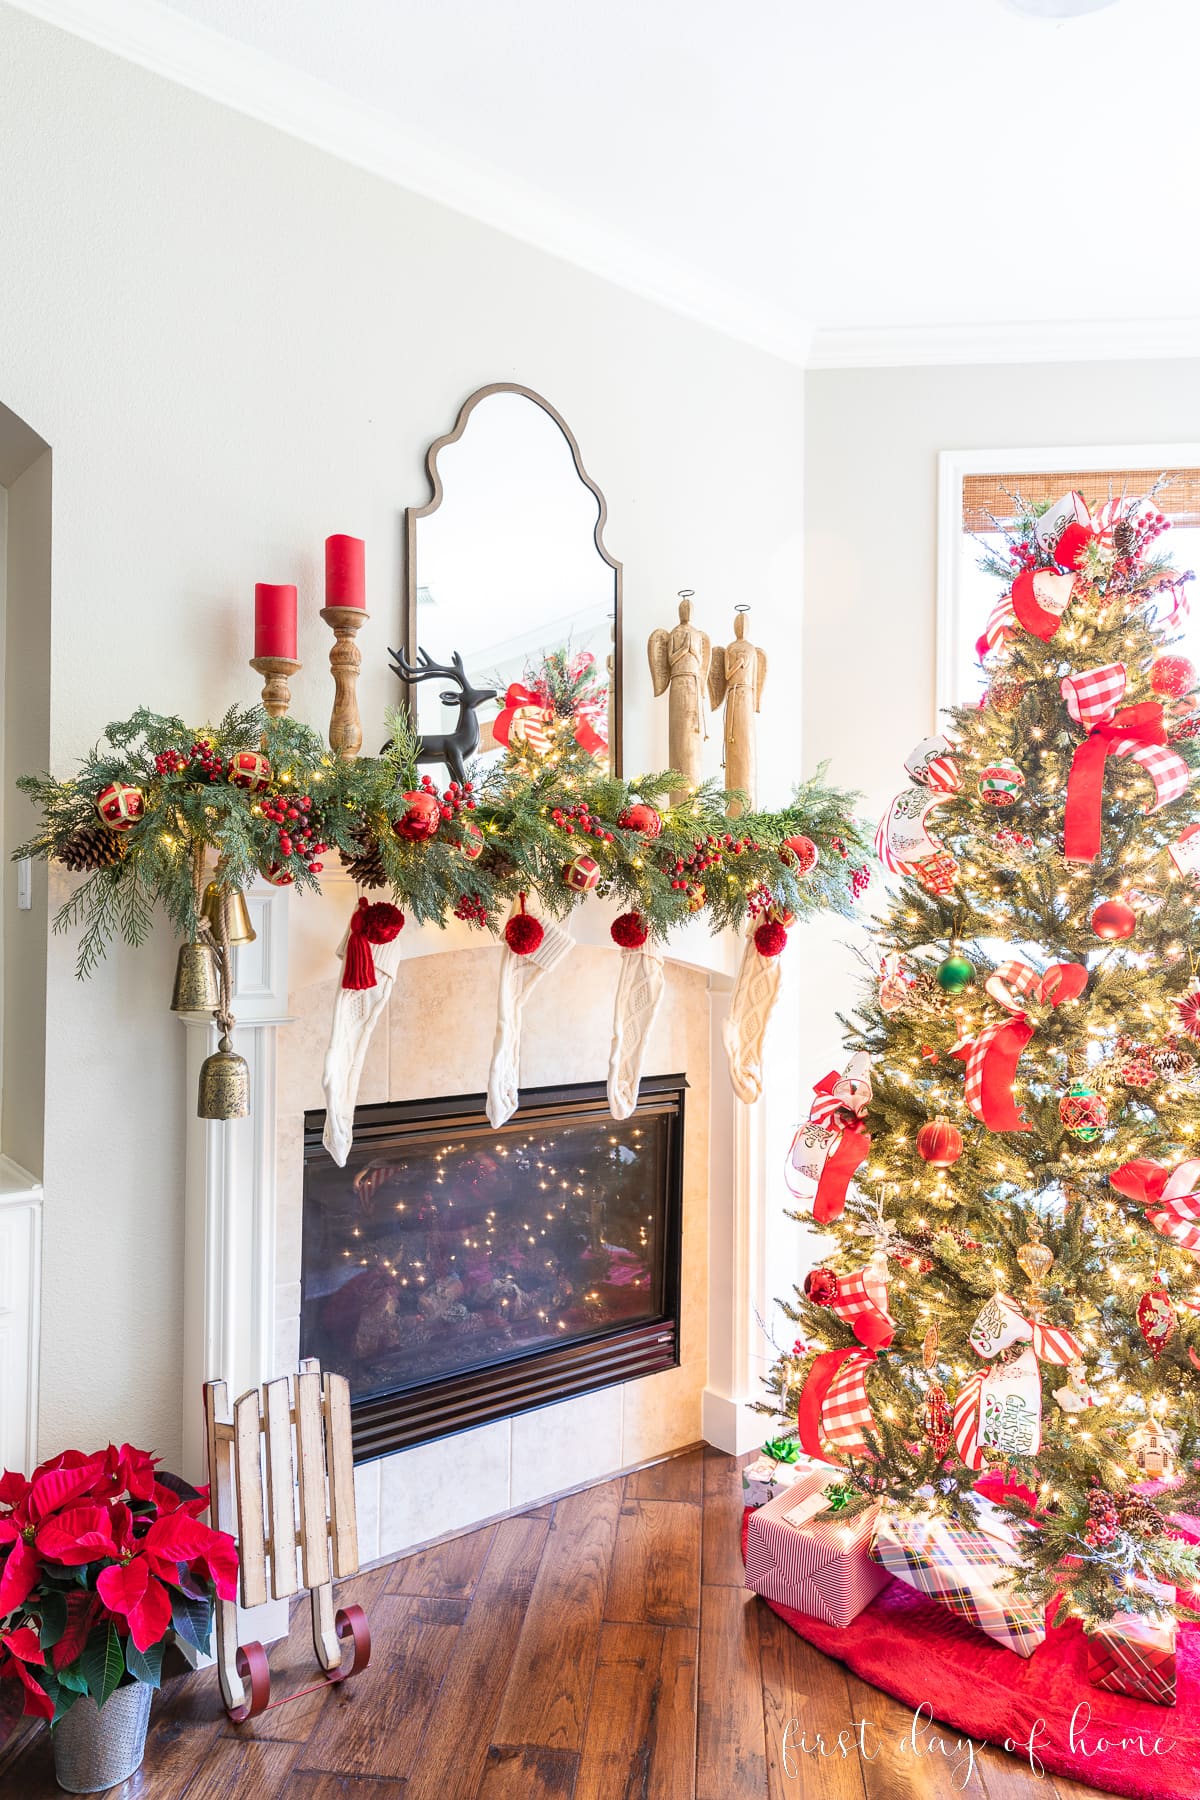 View of Christmas mantel decor and Christmas tree from a side angle